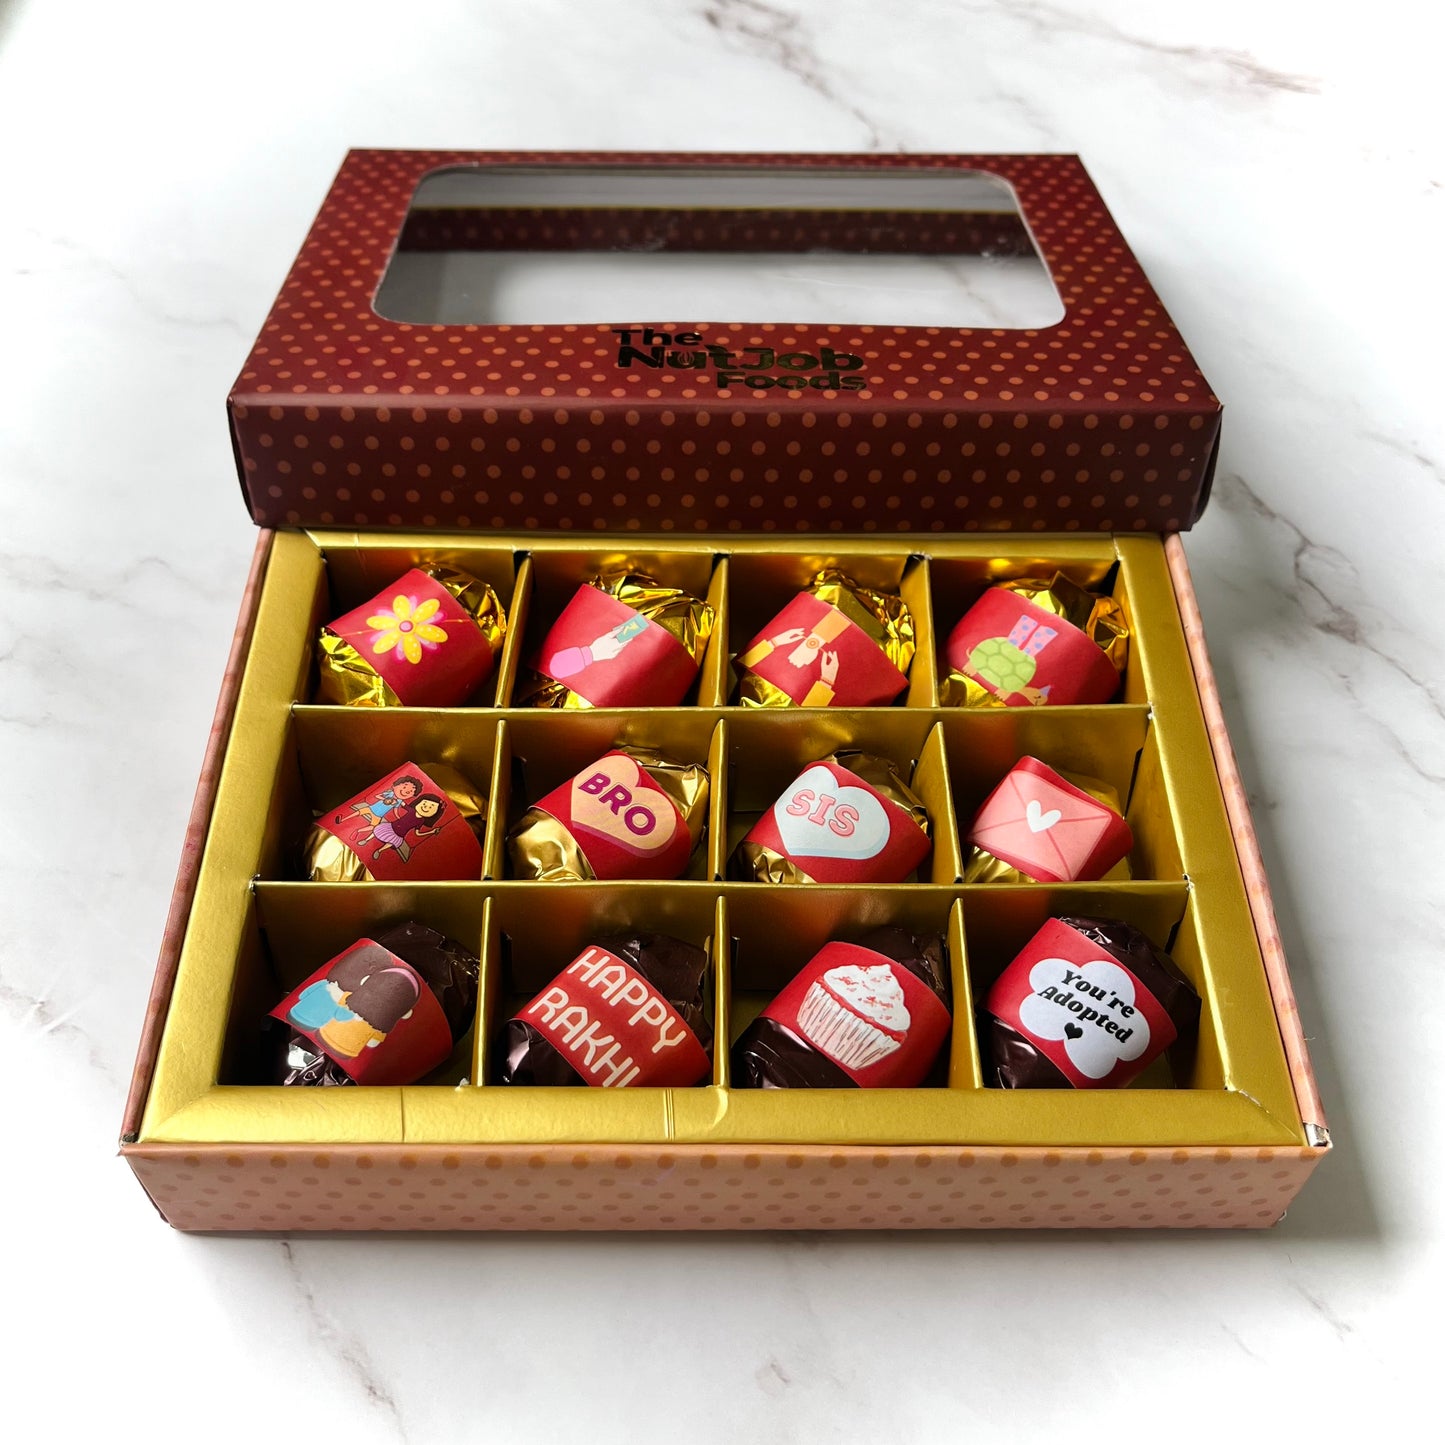 Rakhi Gift Box - Chocolate Dates with Rakhi - 4 Dark Chocolate & Almond Dates with Rakhi - 4 White Chocolate Almond & Coconut Dates - 4 Dark Chocolate Almond & Coconut Dates - Dry Fruits Gift Box - Rakhi Gift